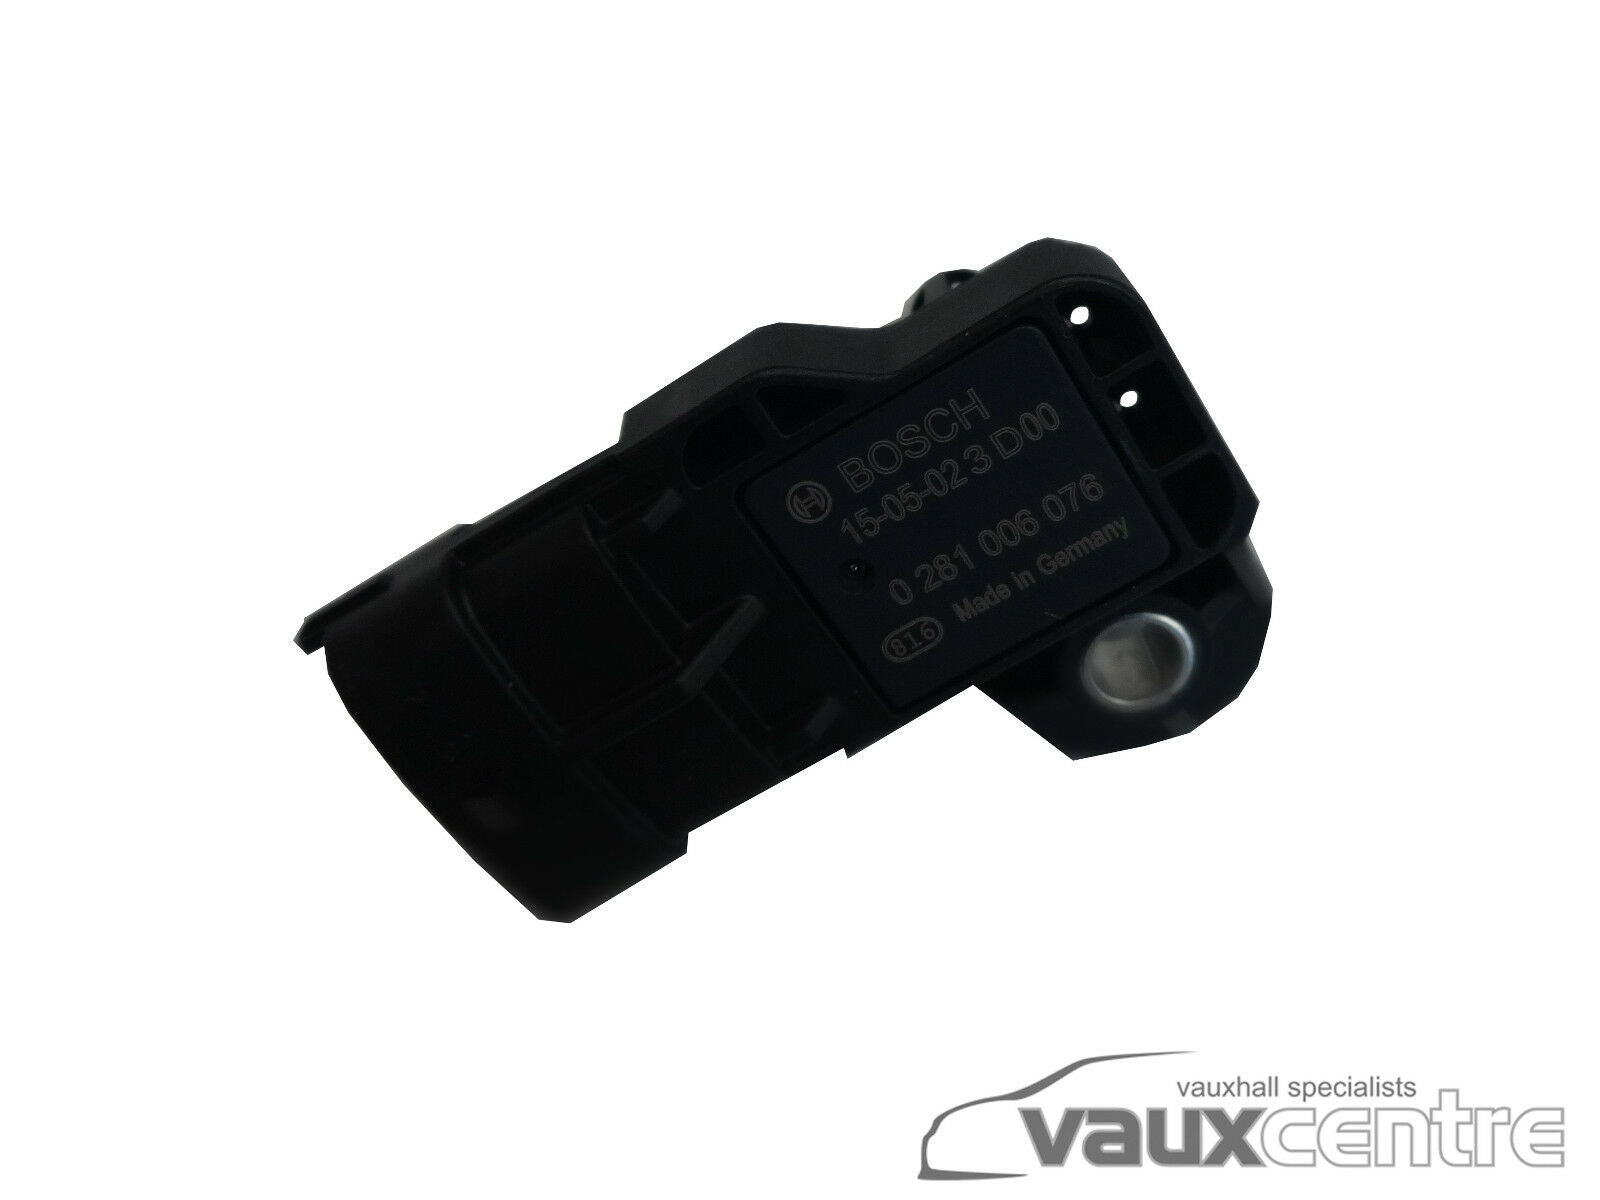 Vauxhall Astra Corsa Insignia Mokka Etc 1.4 1.6 Petrol Inlet Manifold Pressure Sensor New OE Part 55568175